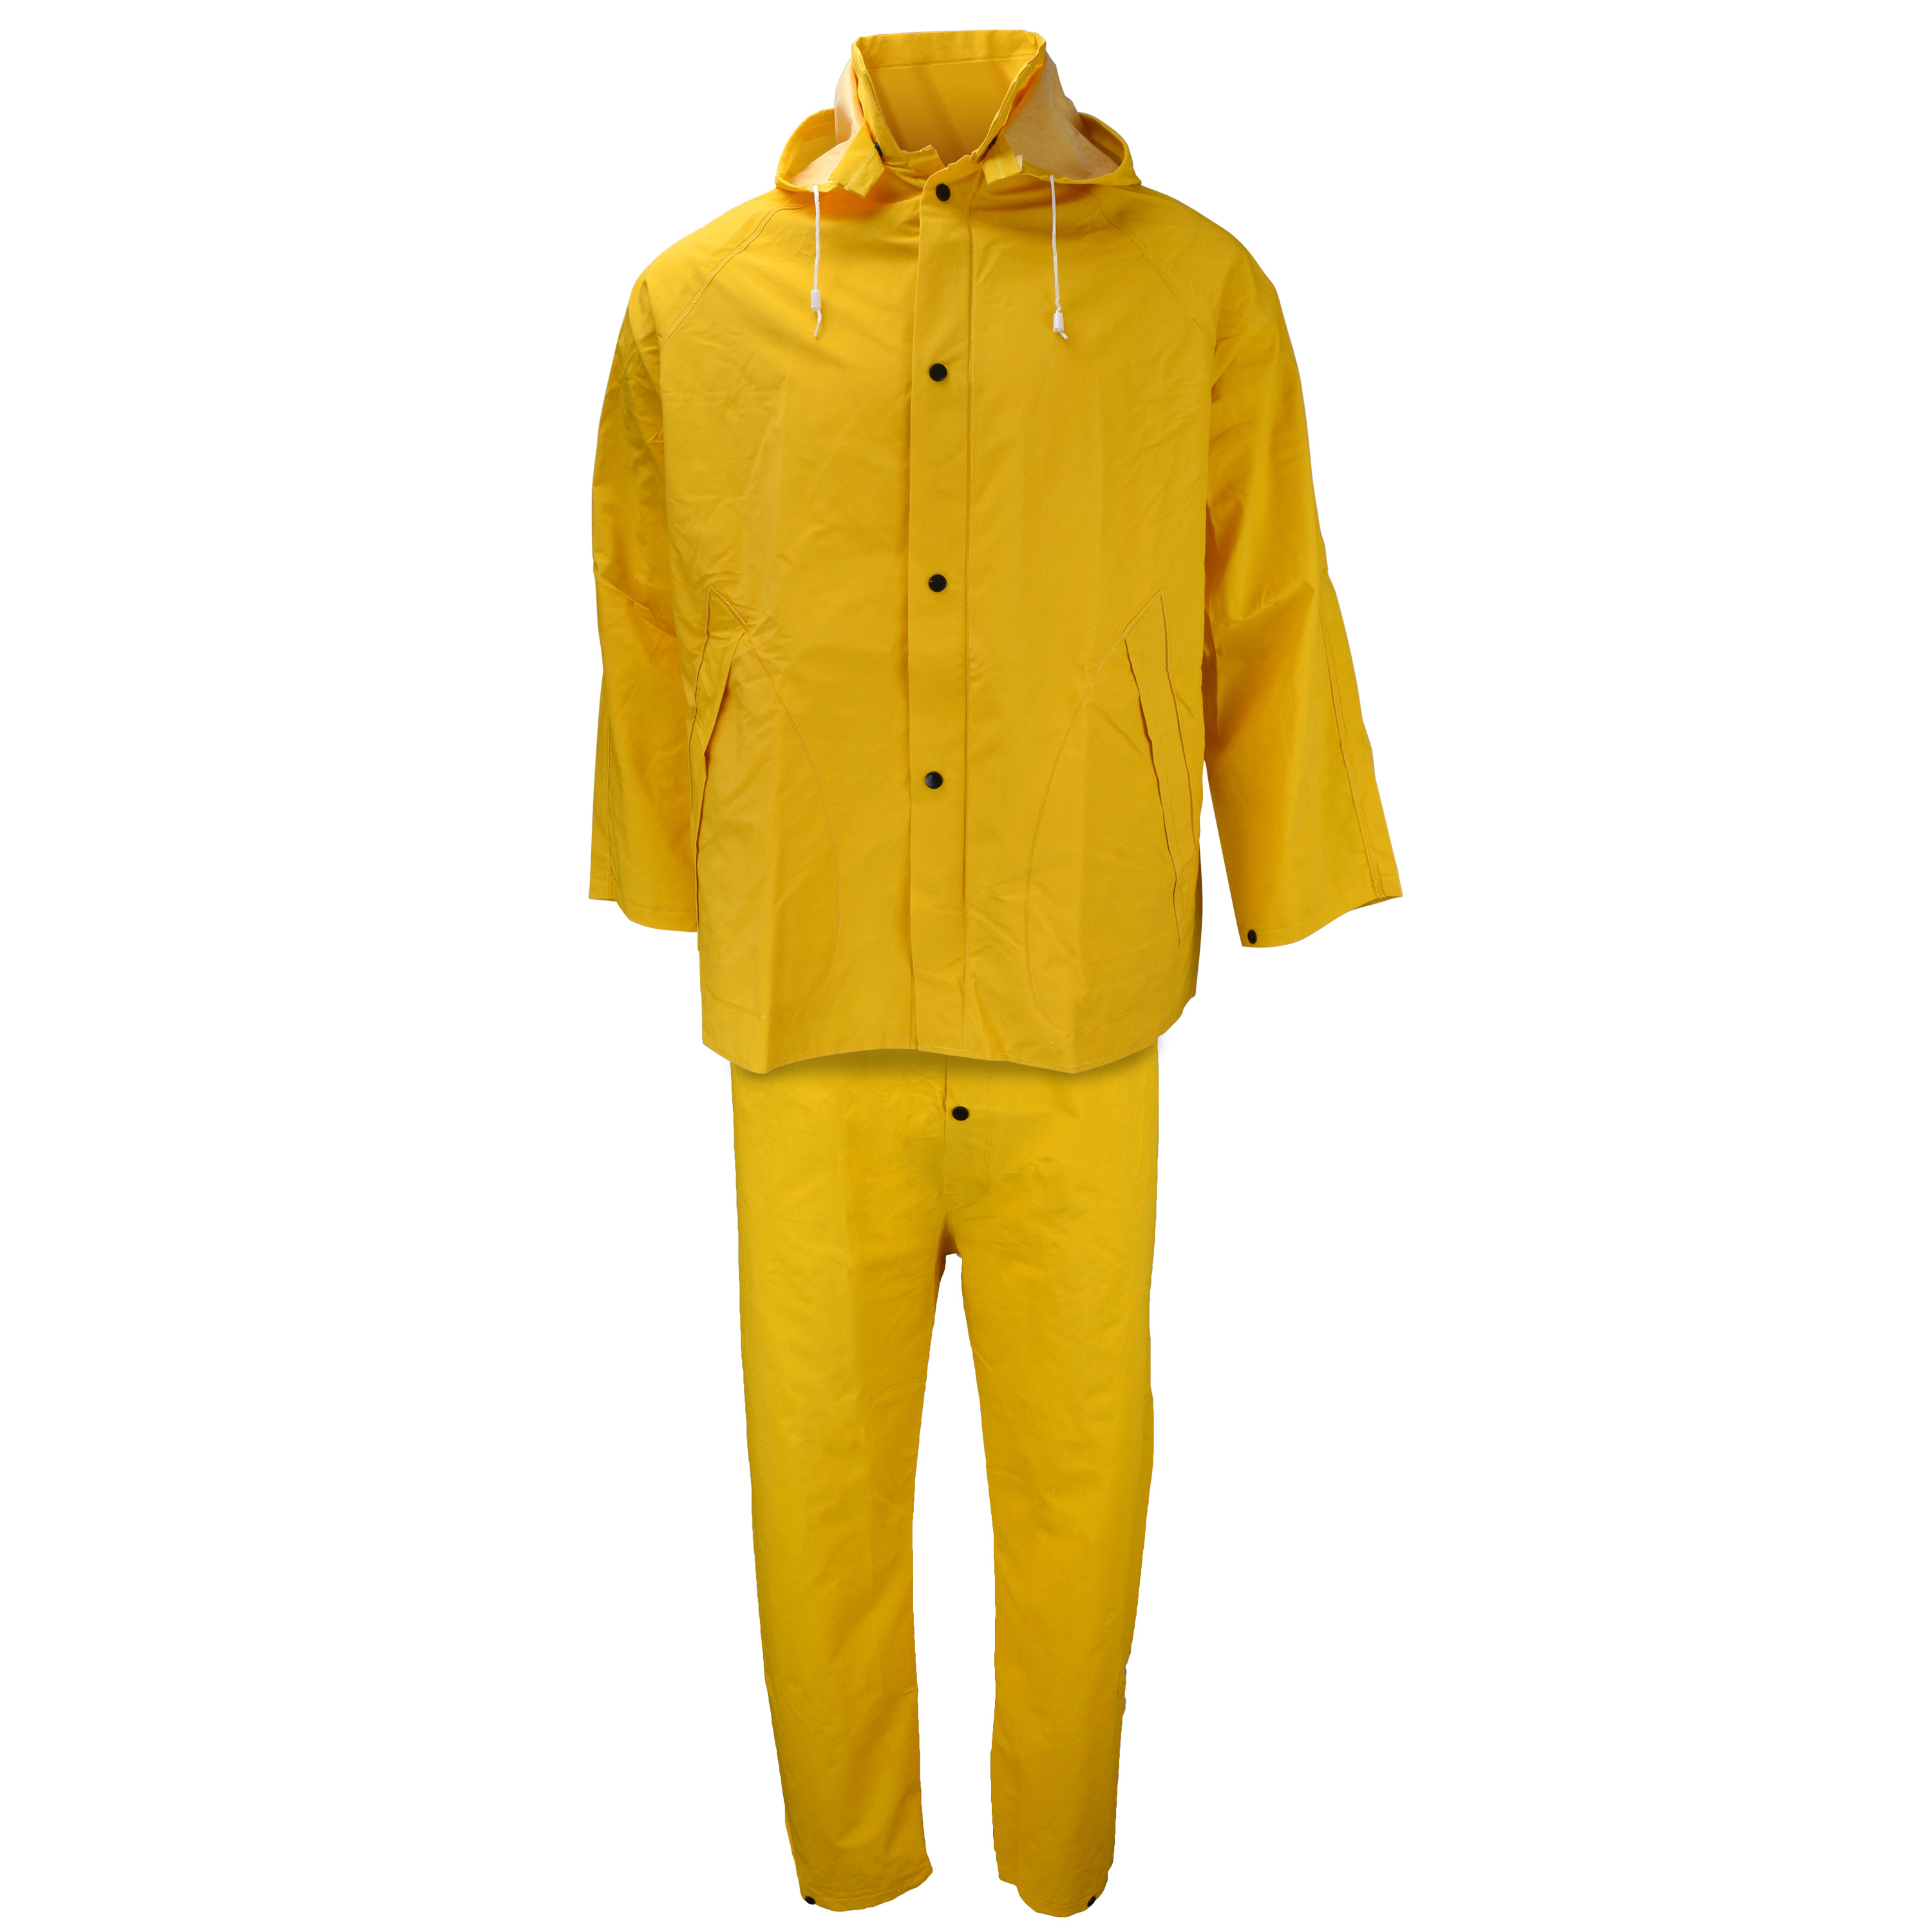 Economy Rain Suit - Safety Yellow - Size 4X - Rain Suits